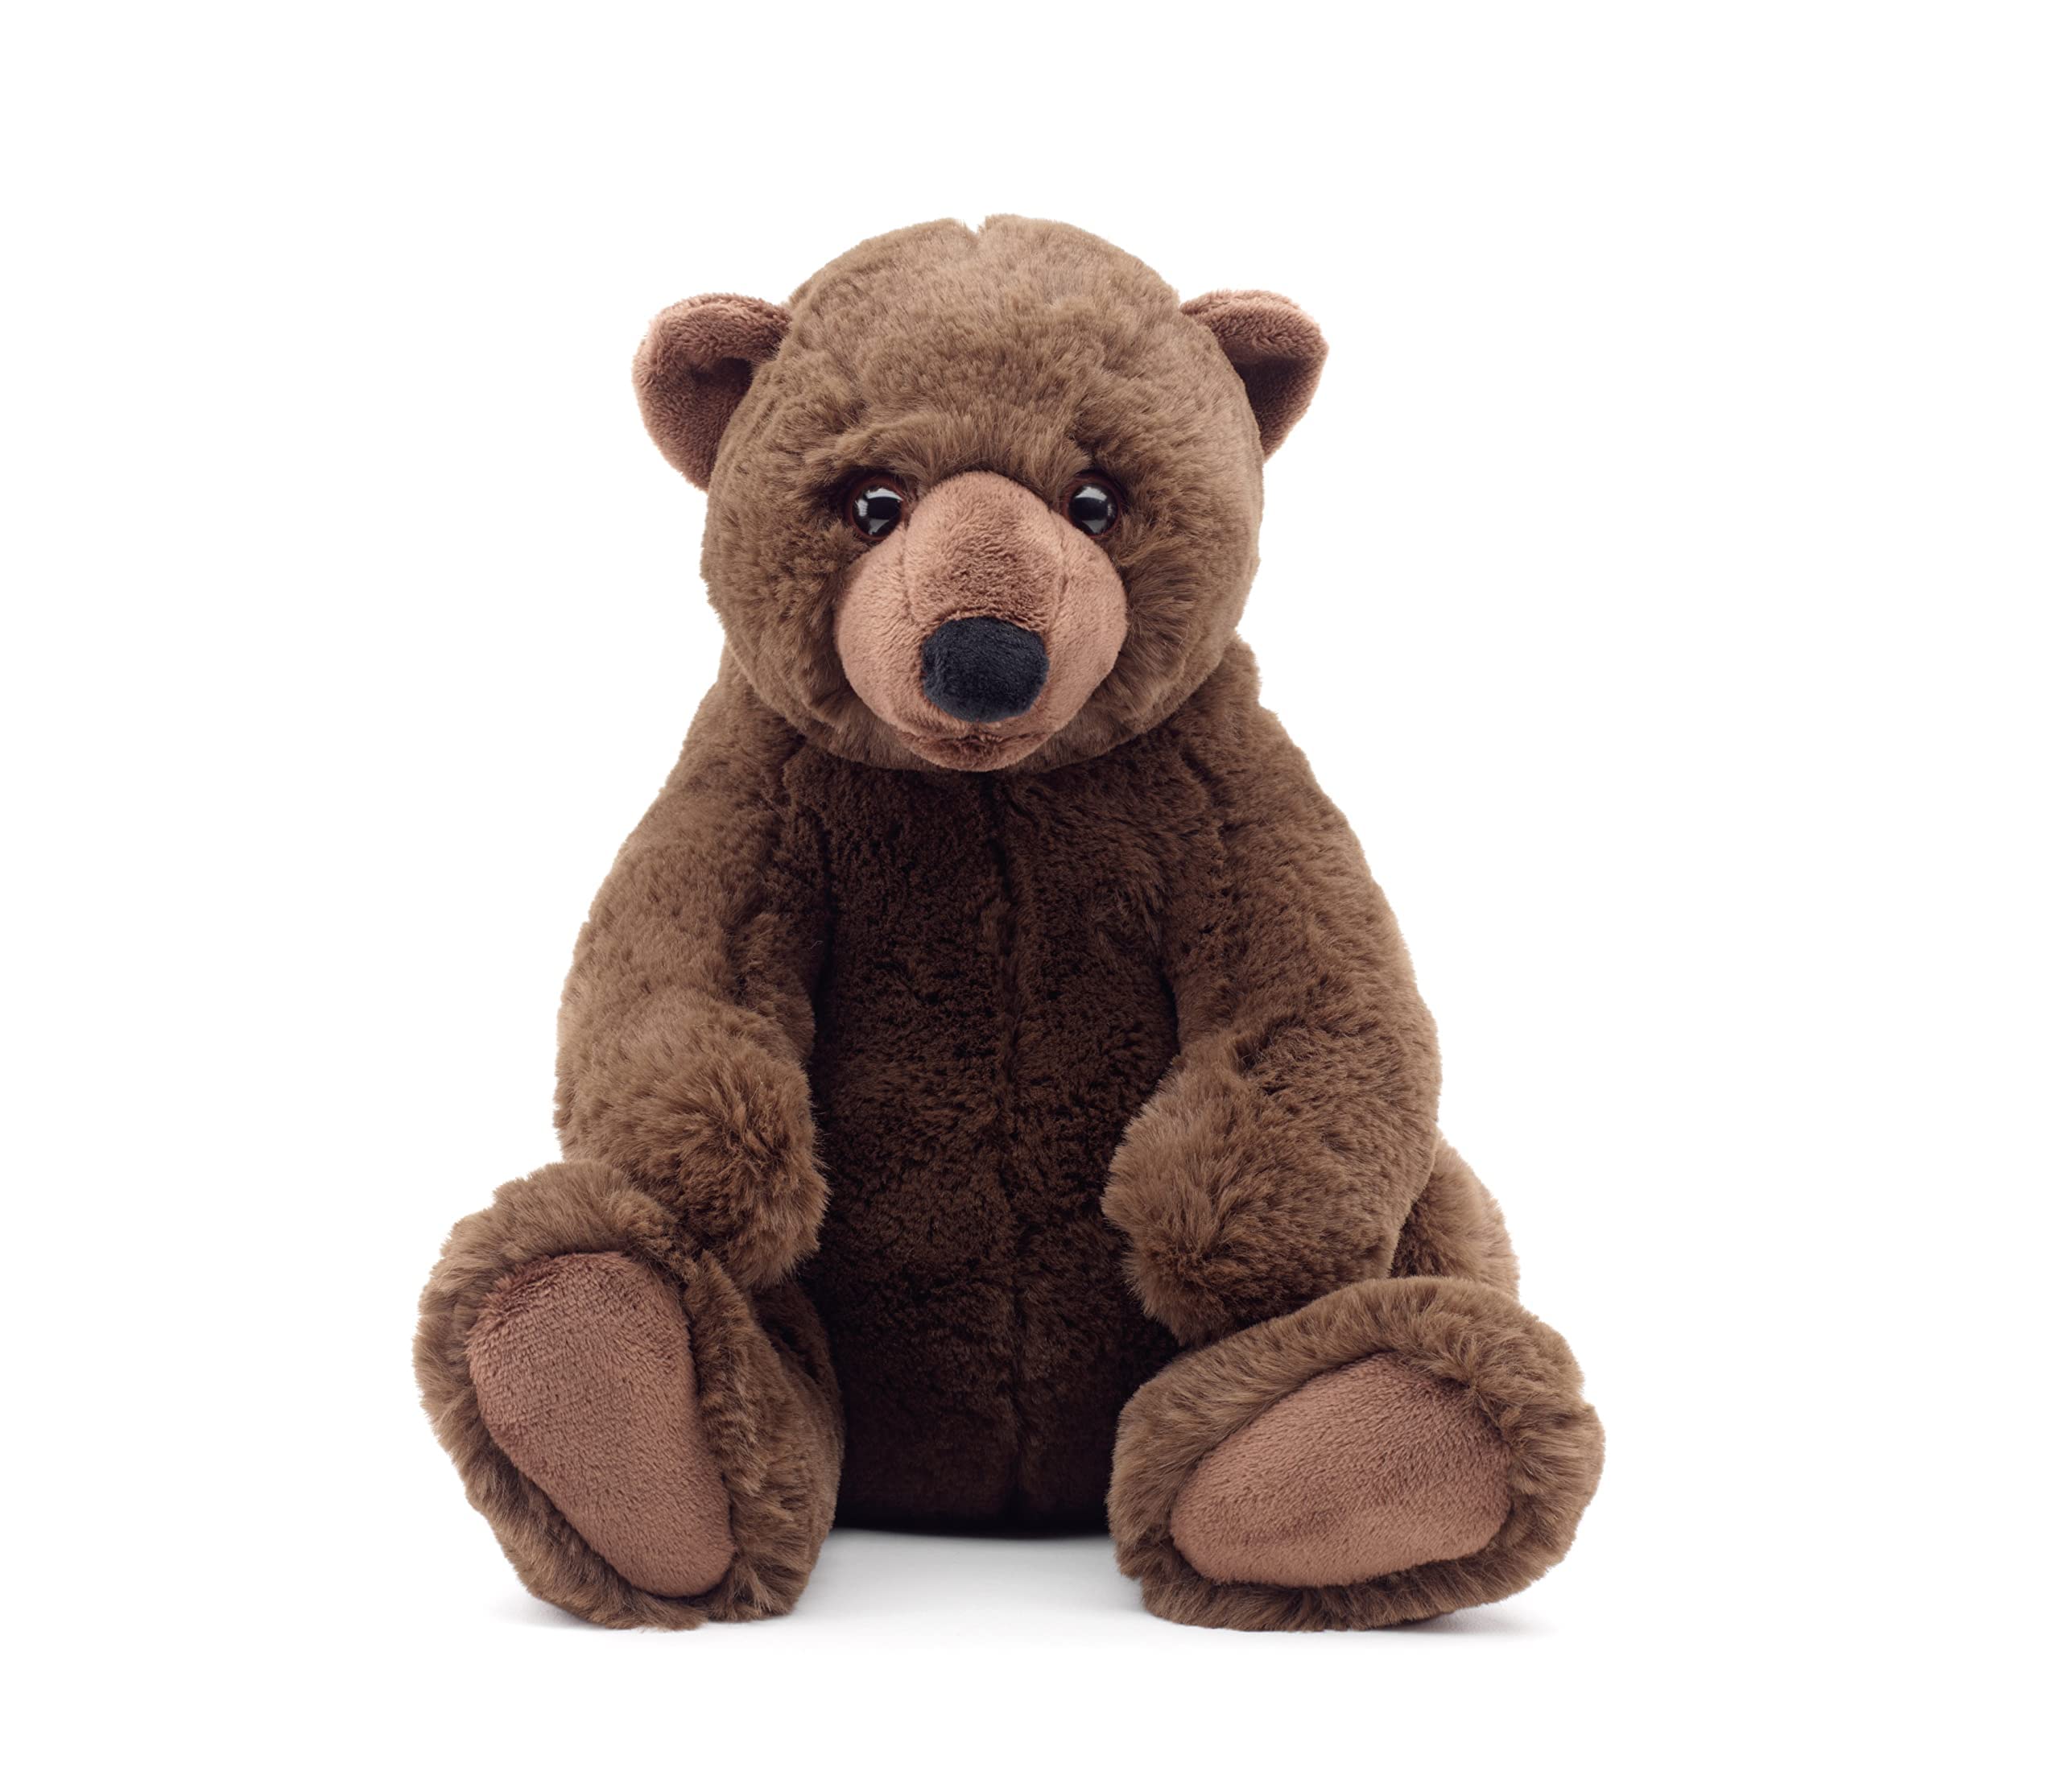 Uni-Toys - Braunbär groß, sitzend - 'Maxi' - superweich - 27 cm (Höhe) - Plüsch-Bär, Teddy, Teddybär - Plüschtier, Kuscheltier